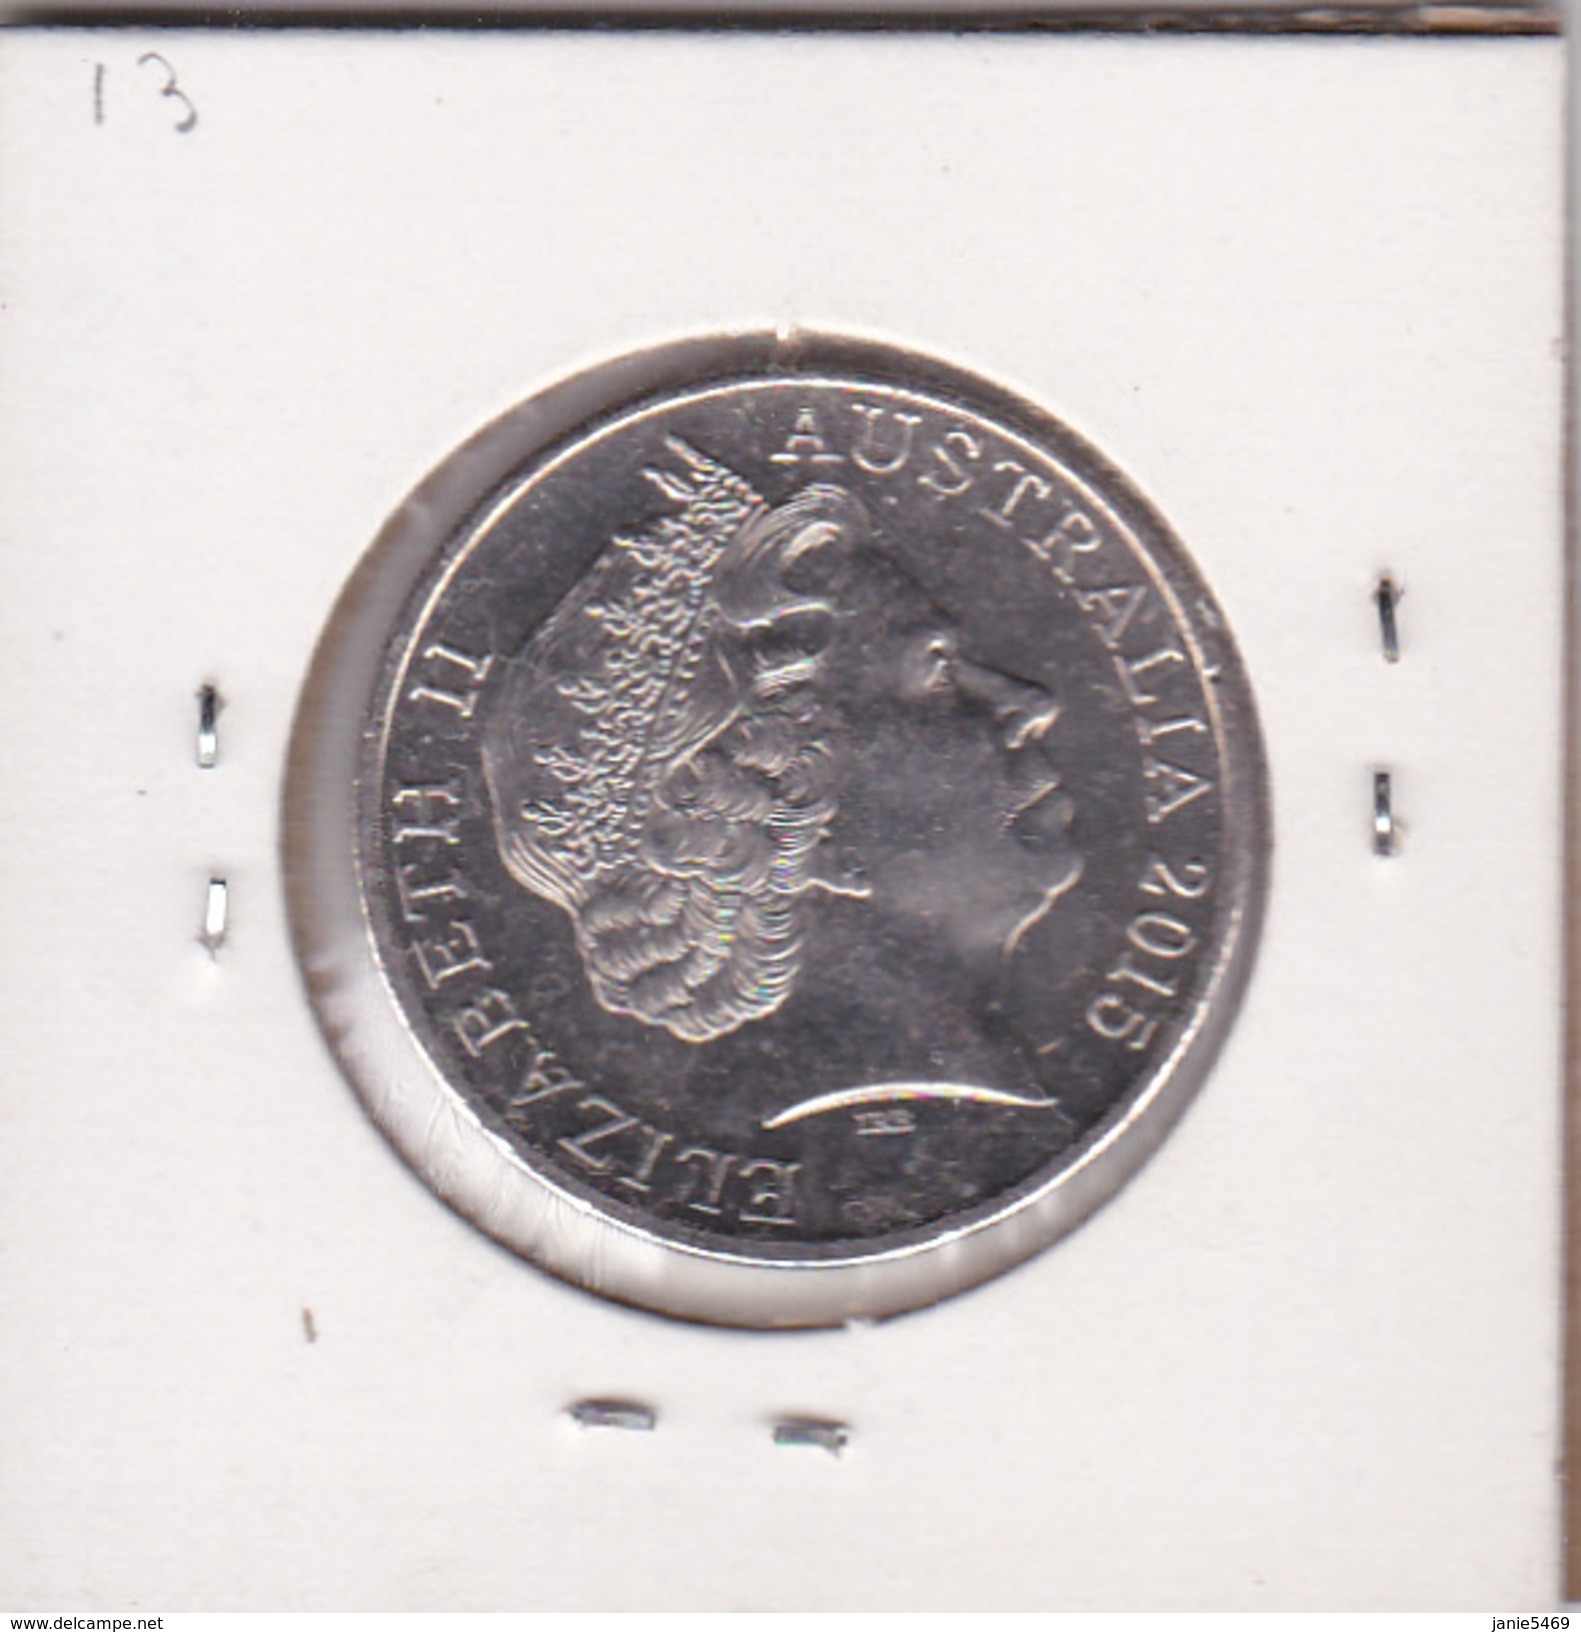 Australia 2015 20c Coin - 20 Cents